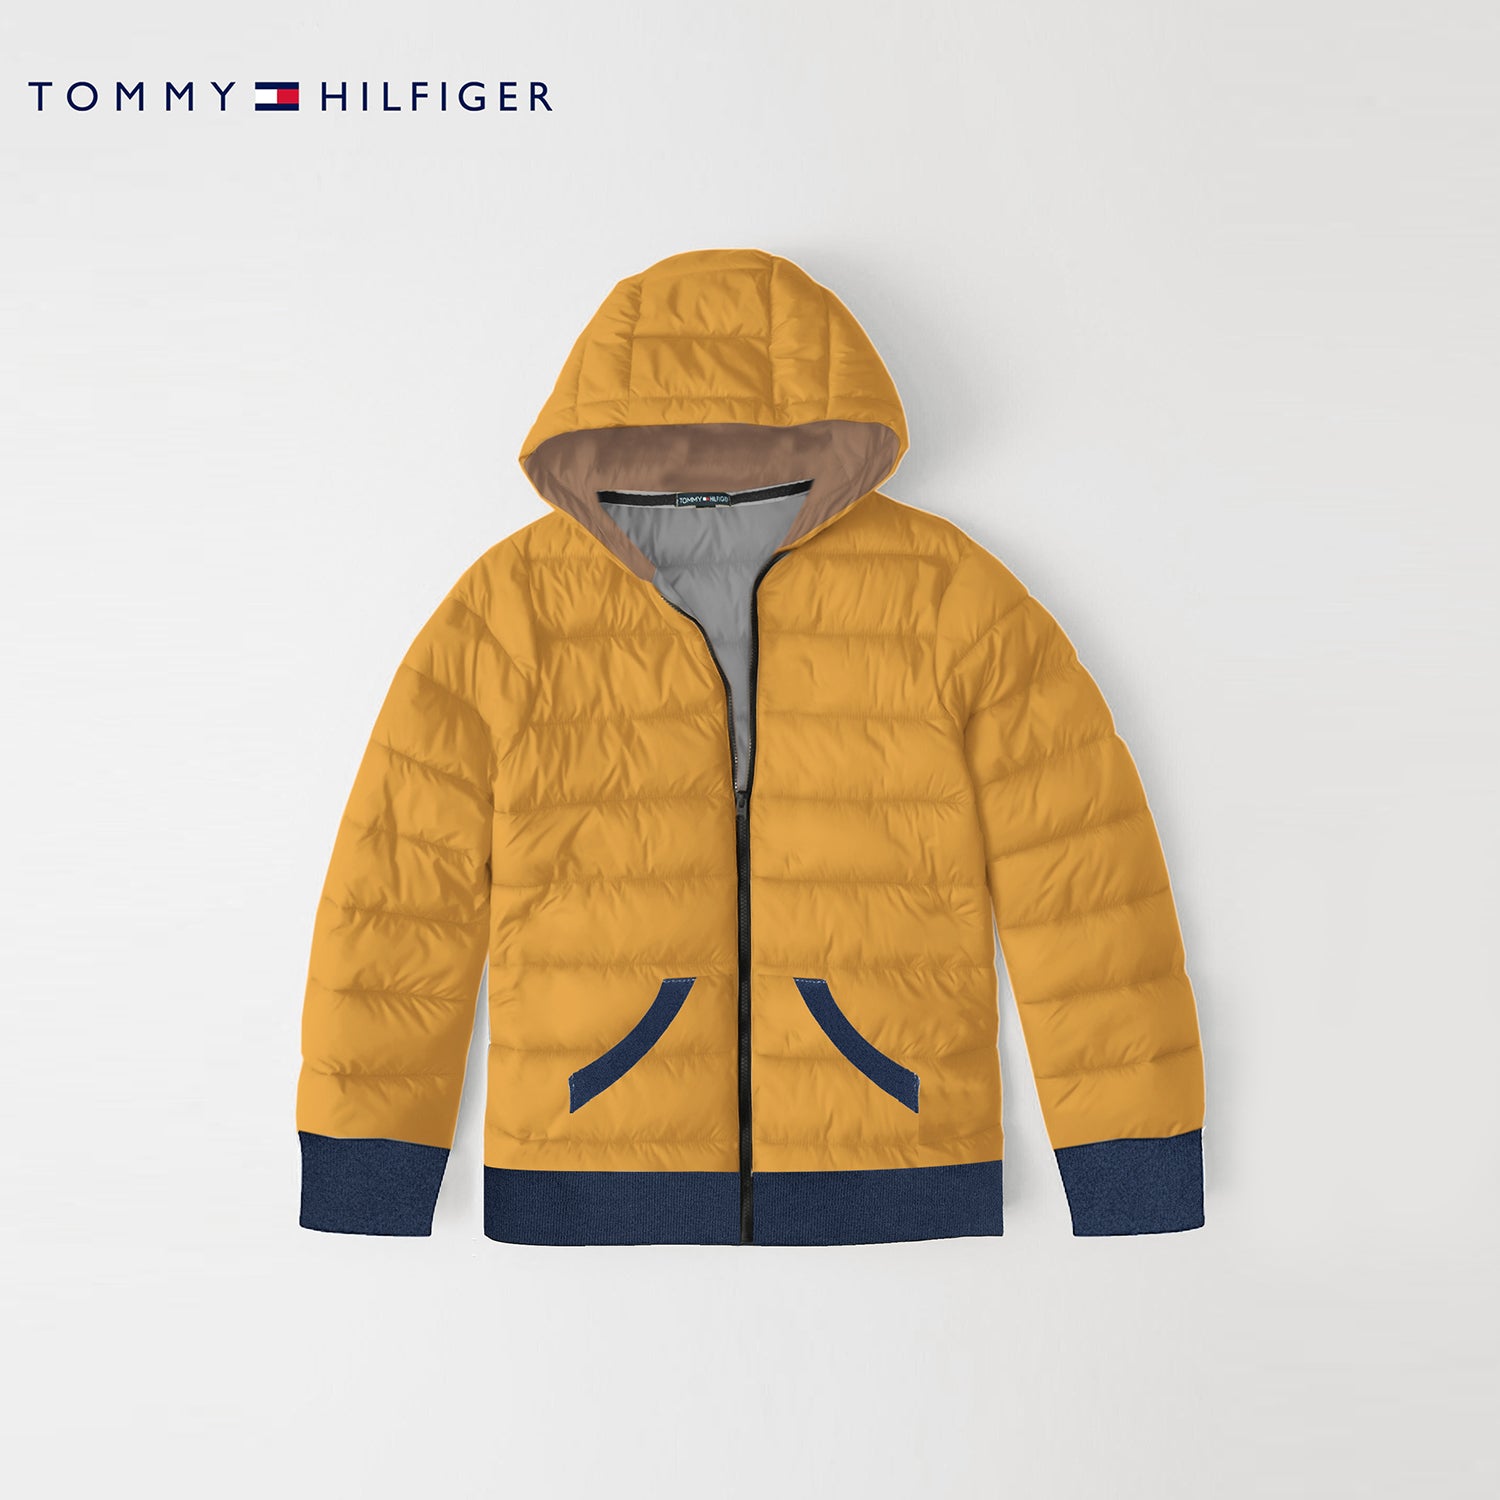 Tommy Hilfiger Coat Size Chart